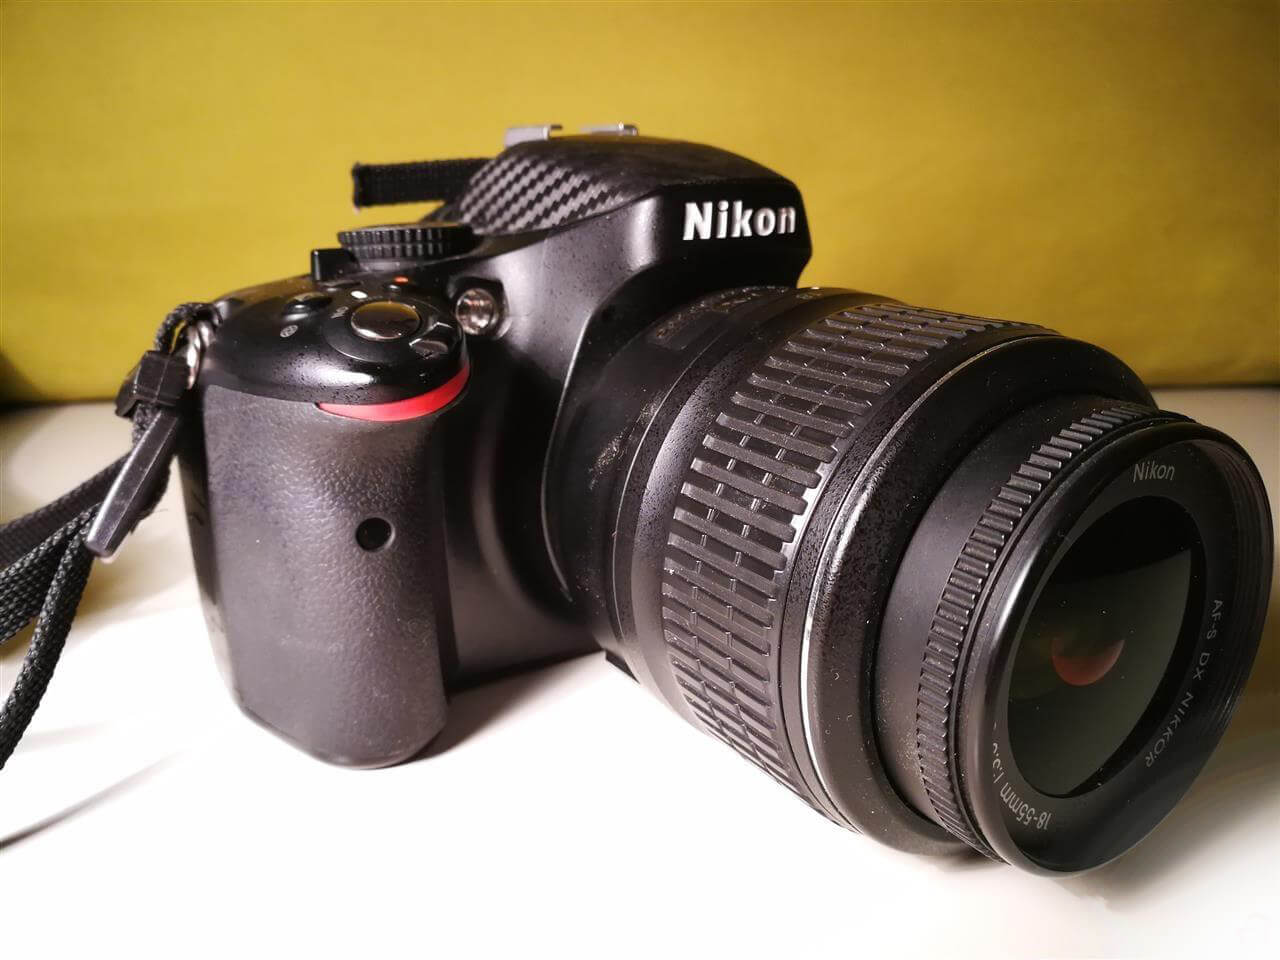 Best Zoom Lens For Nikon D5100 in 2020 CameraGurus